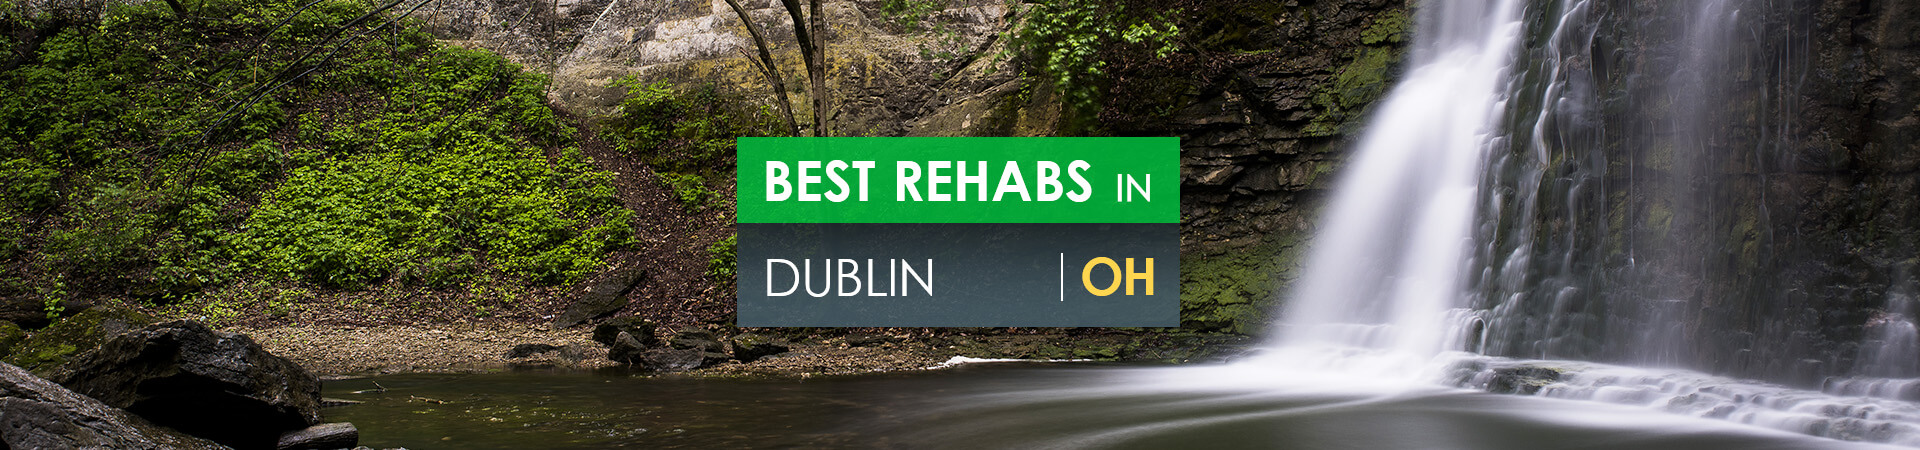 Best rehabs in Dublin, OH